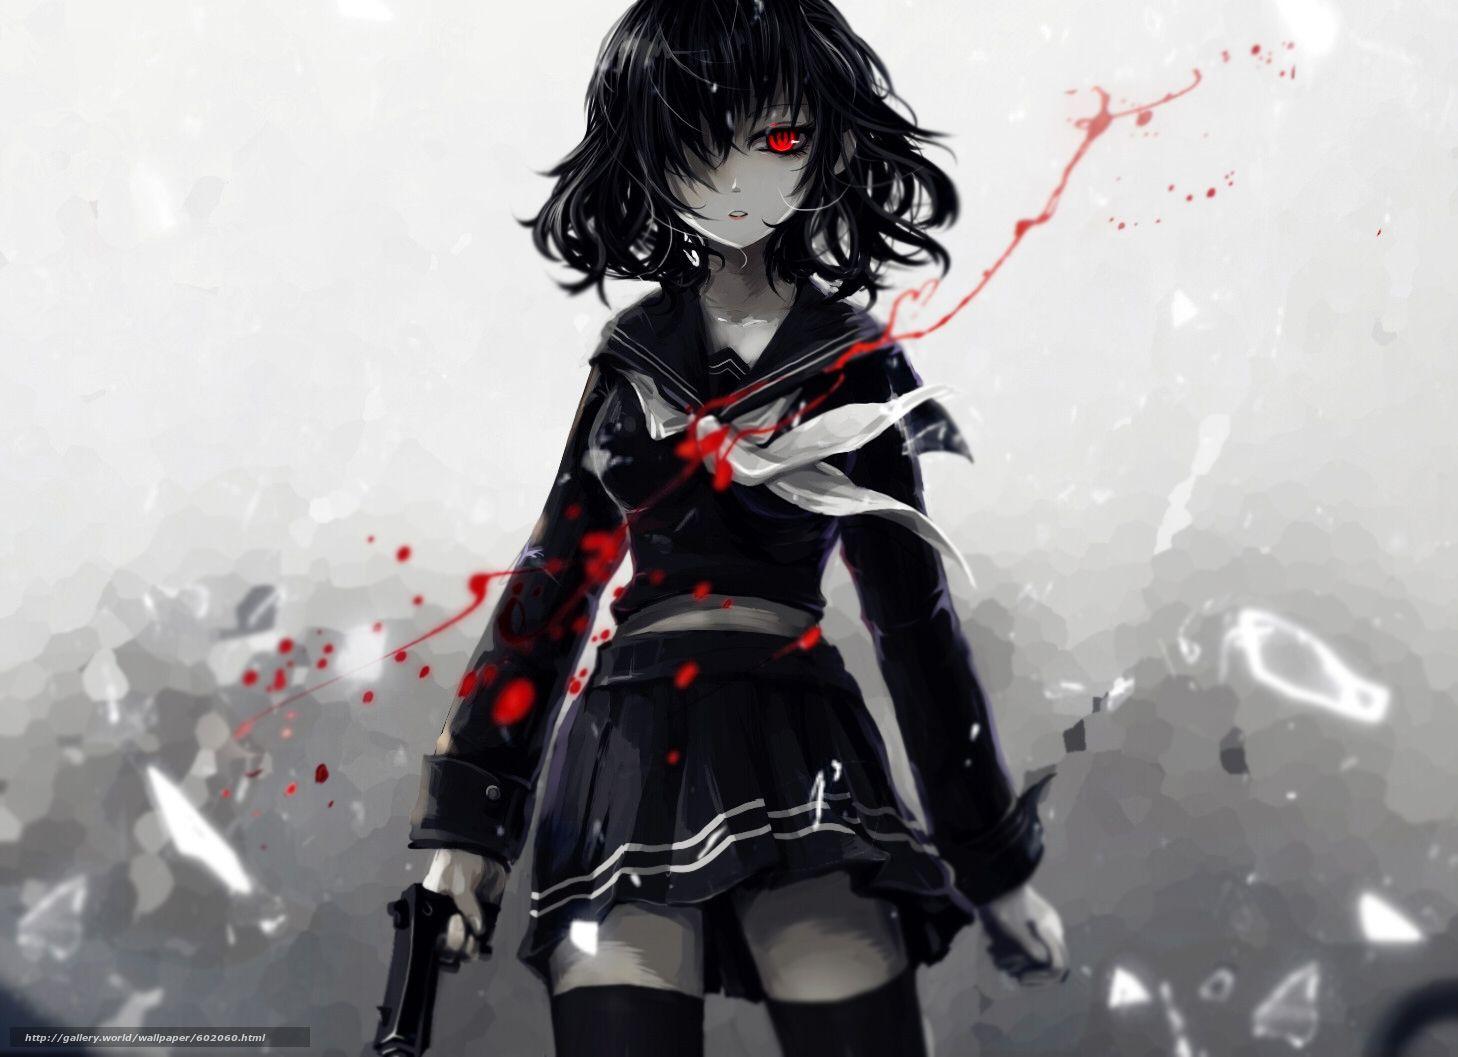 Psycho Anime Girl Wallpaper Free Psycho Anime Girl Background